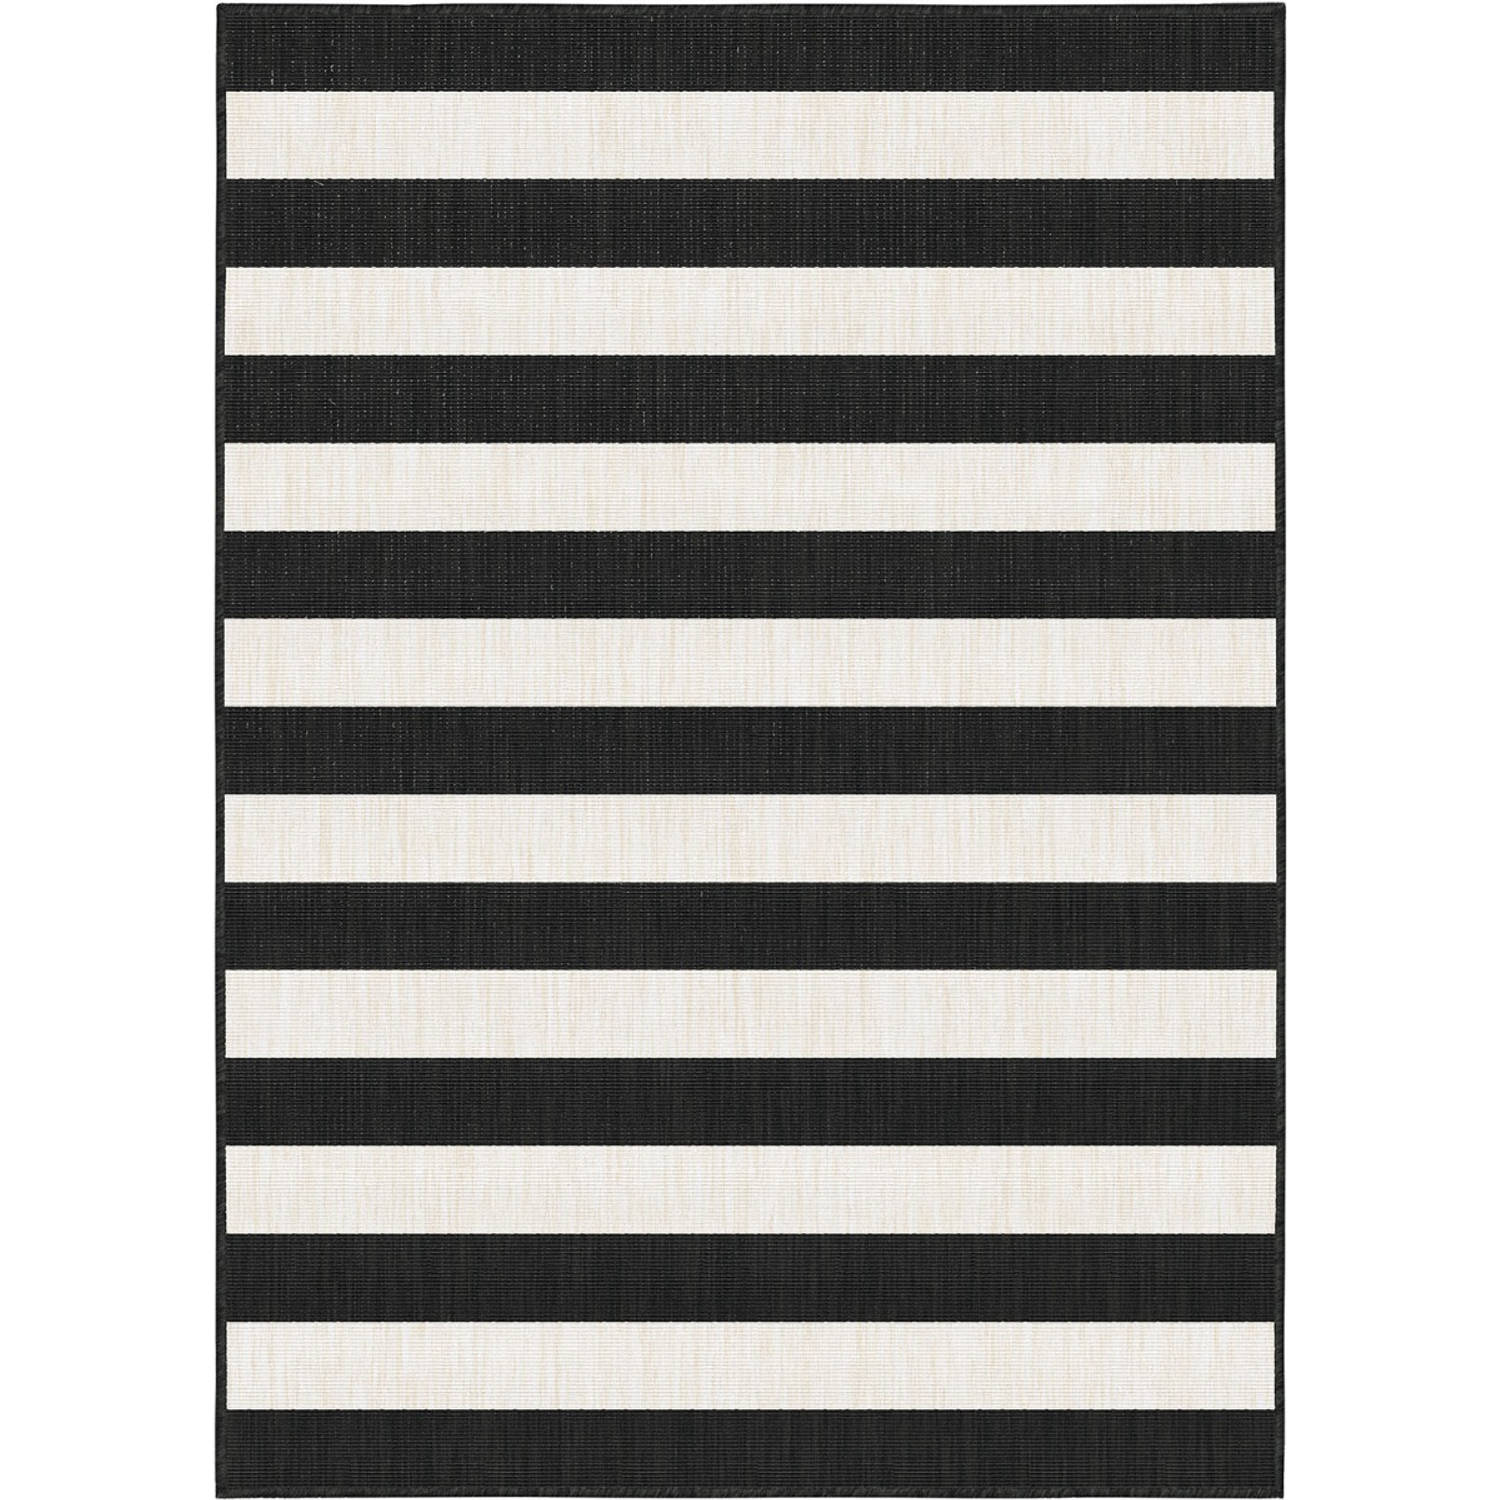 Buitenkleed Stripes zwart/wit dubbelzijdig